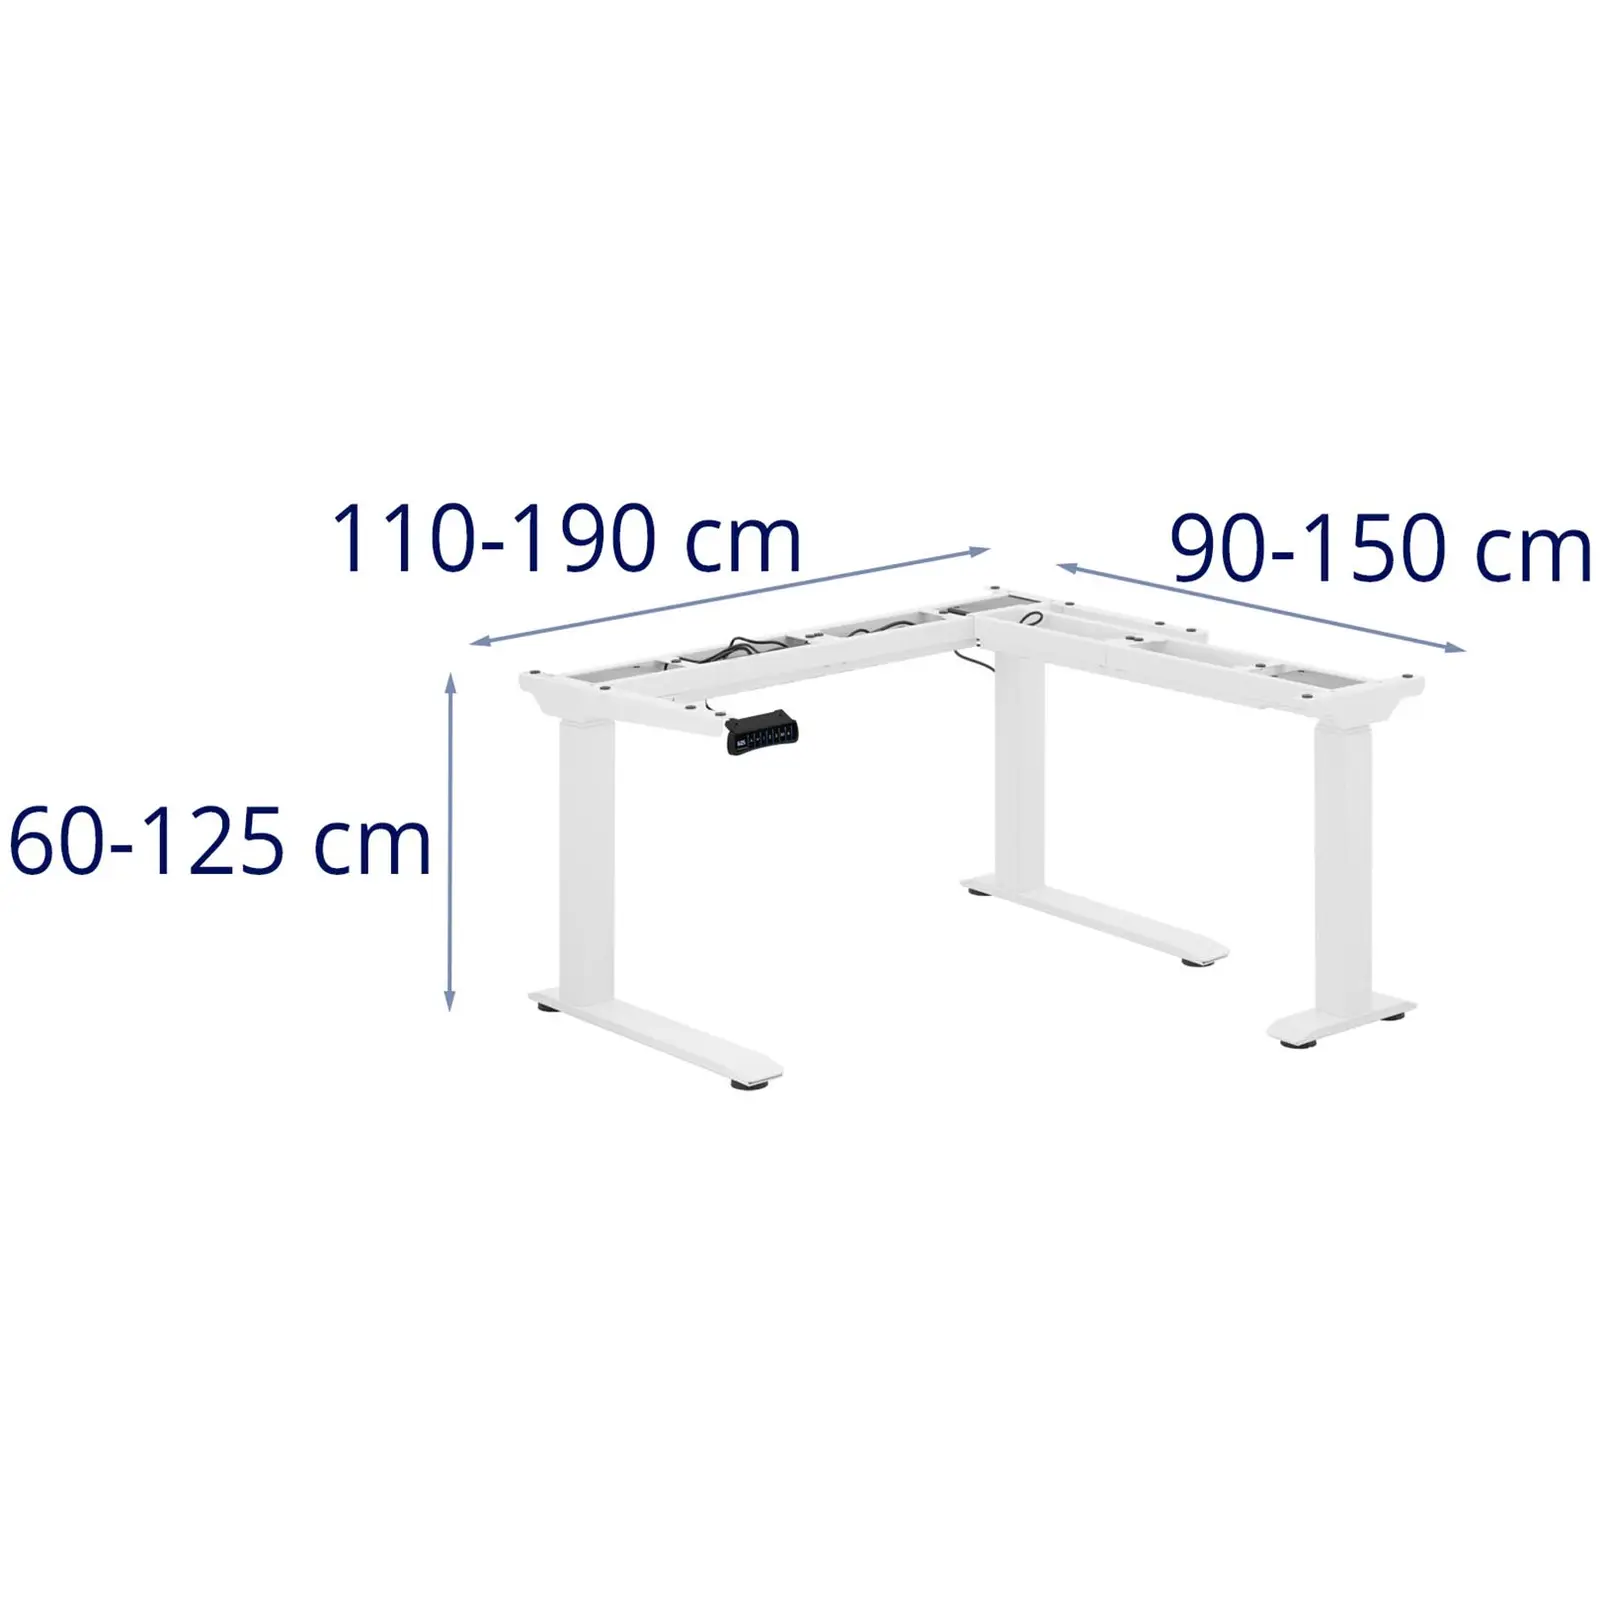 Corner Standing Desk Frame - height-adjustable - for sitting & standing - height 60 - 125 cm - width: 110 - 190 cm (left) / 90 - 150 cm (right)